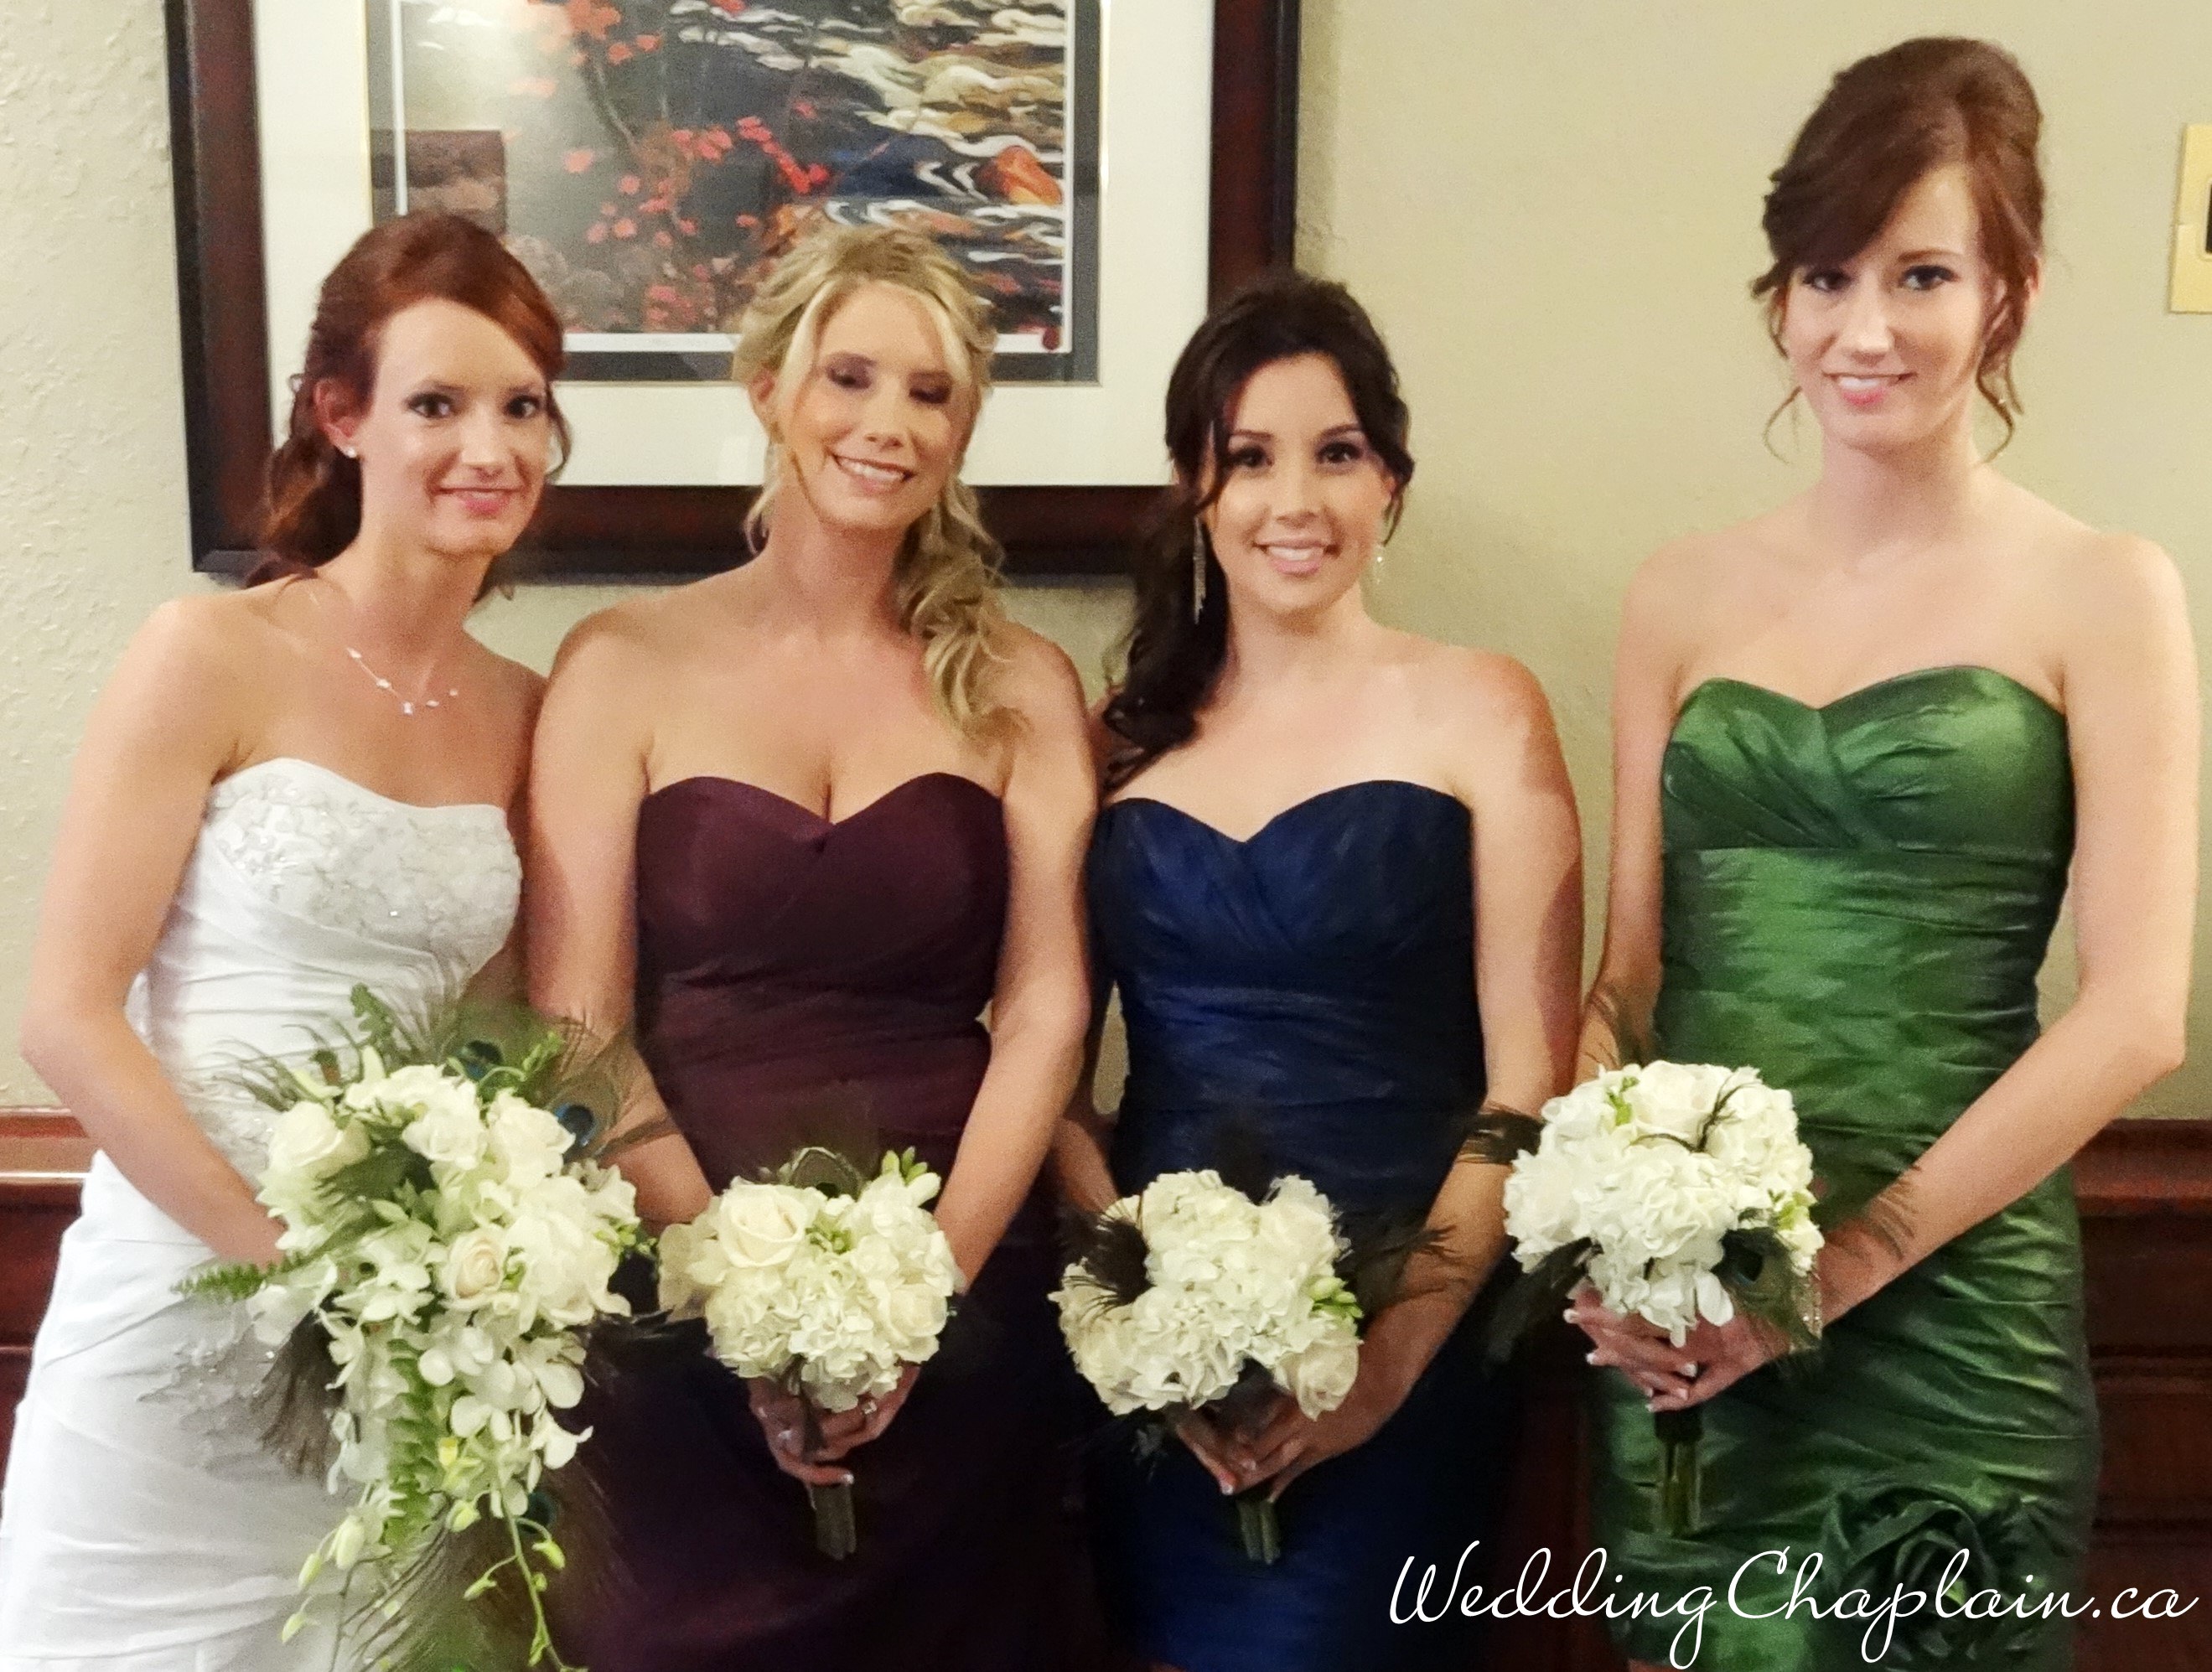 https://www.ottawaweddingmagazine.com/wp-content/uploads/2014/12/kayla-bridesmaids.jpg